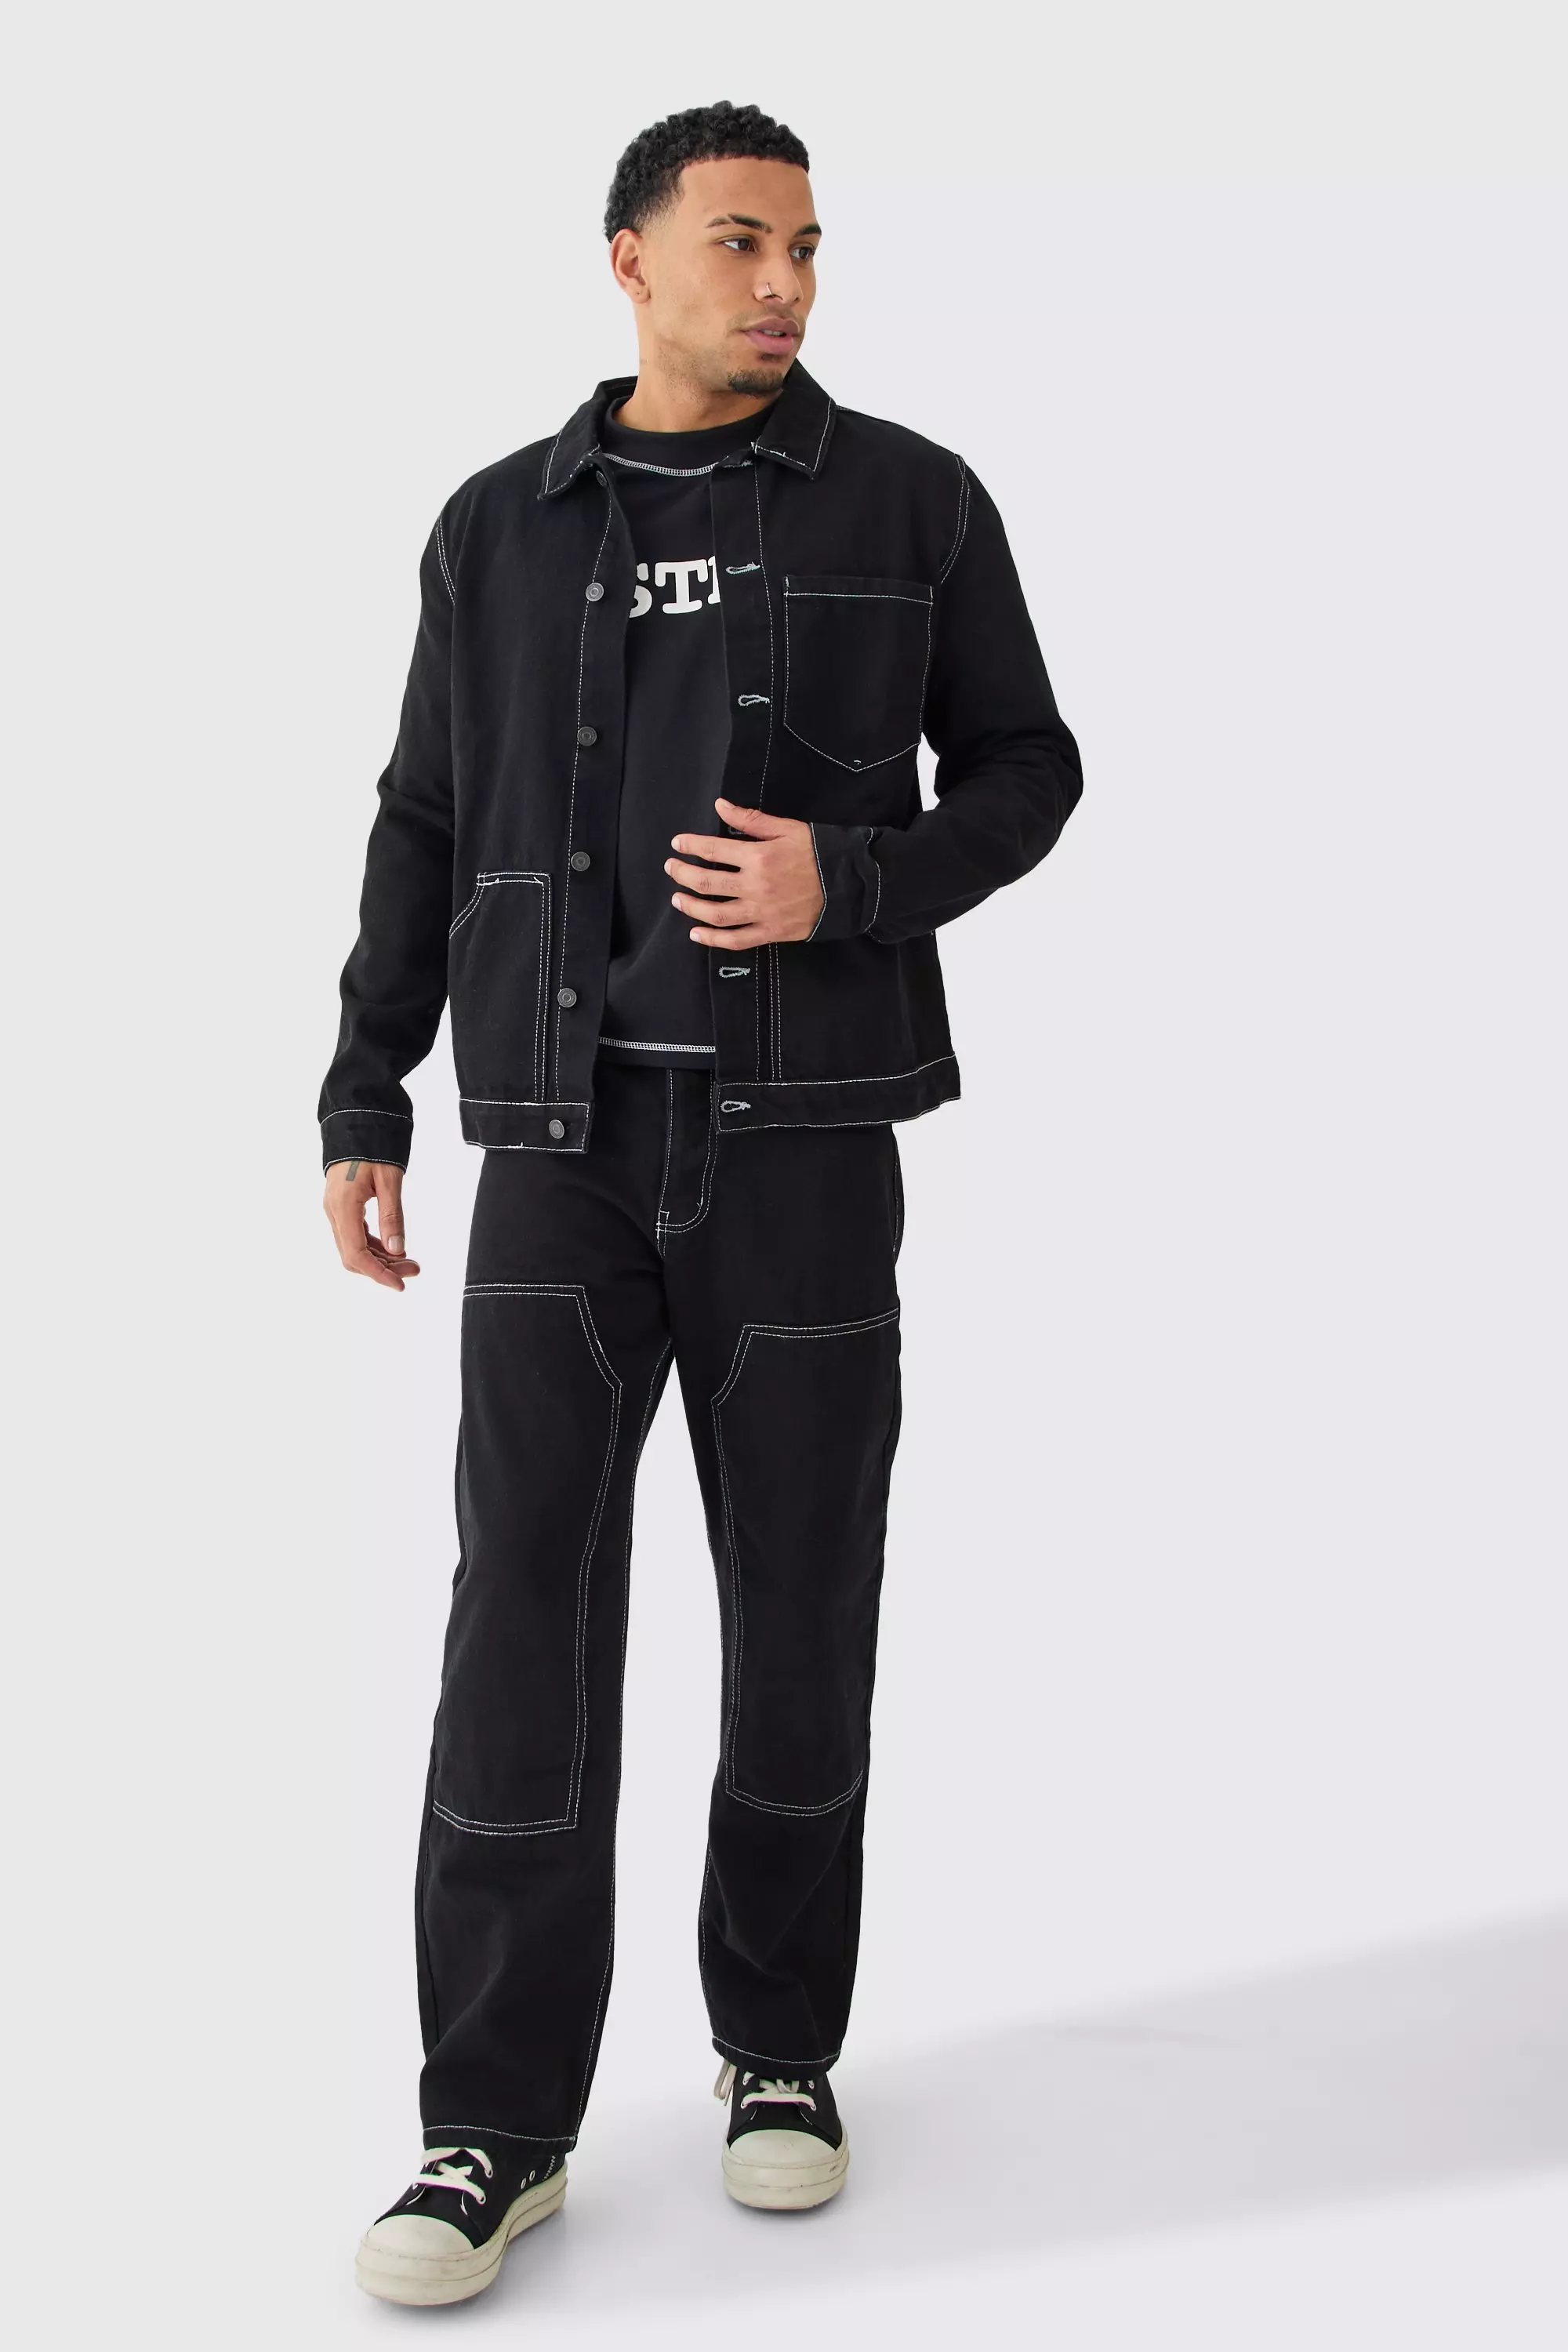 Twill Western Contrast Stitch Overshirt & Trouser Black